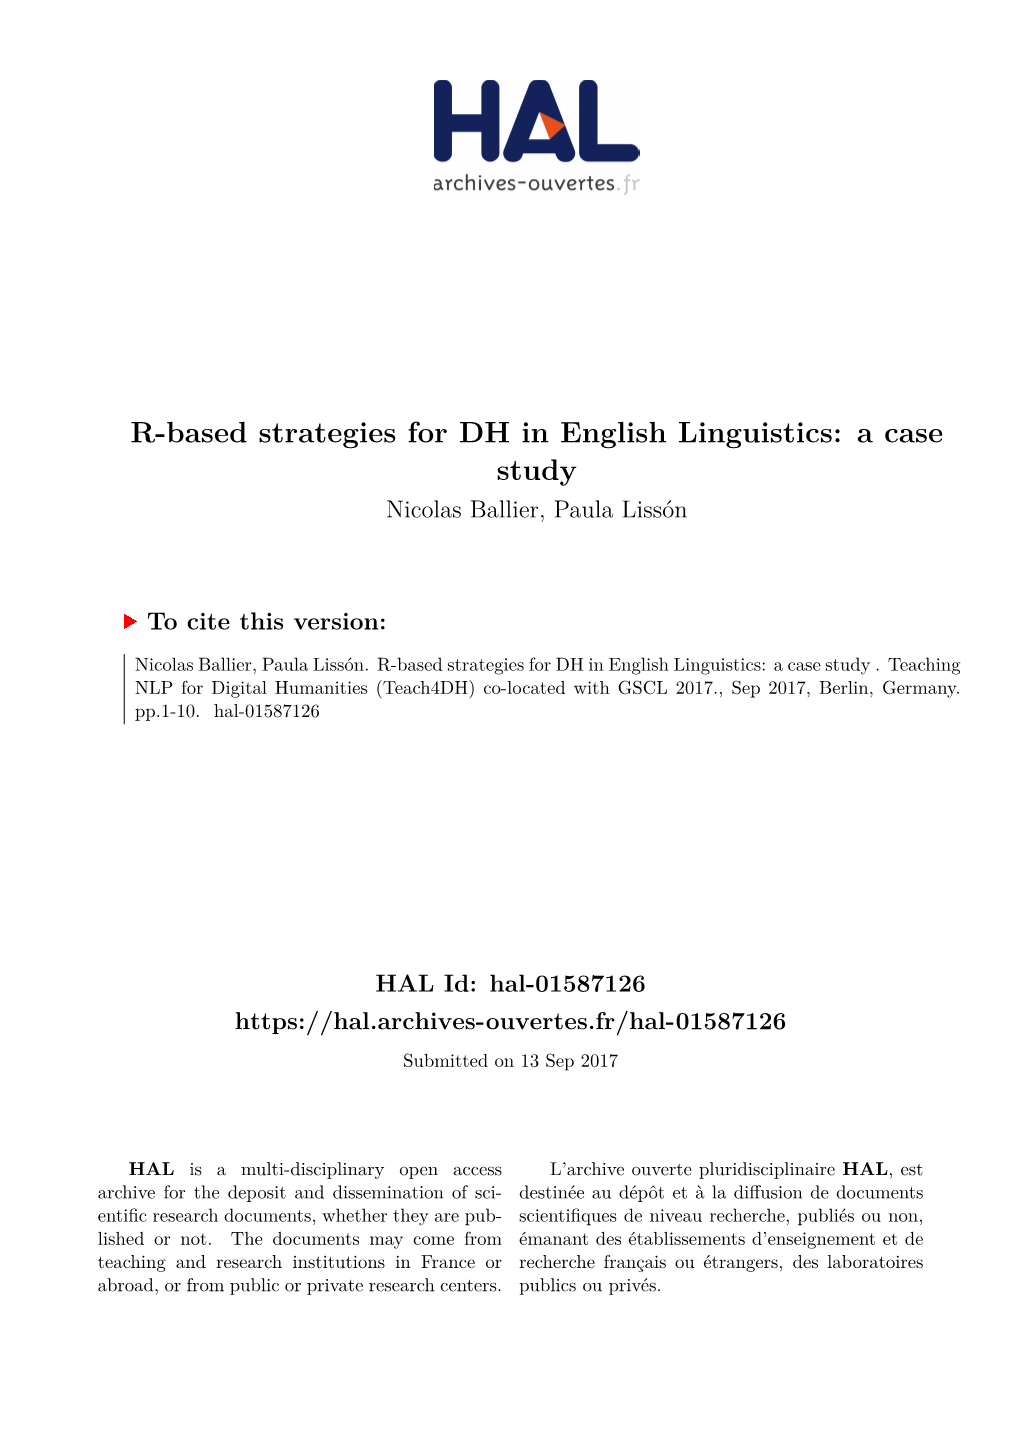 R-Based Strategies for DH in English Linguistics: a Case Study Nicolas Ballier, Paula Lissón